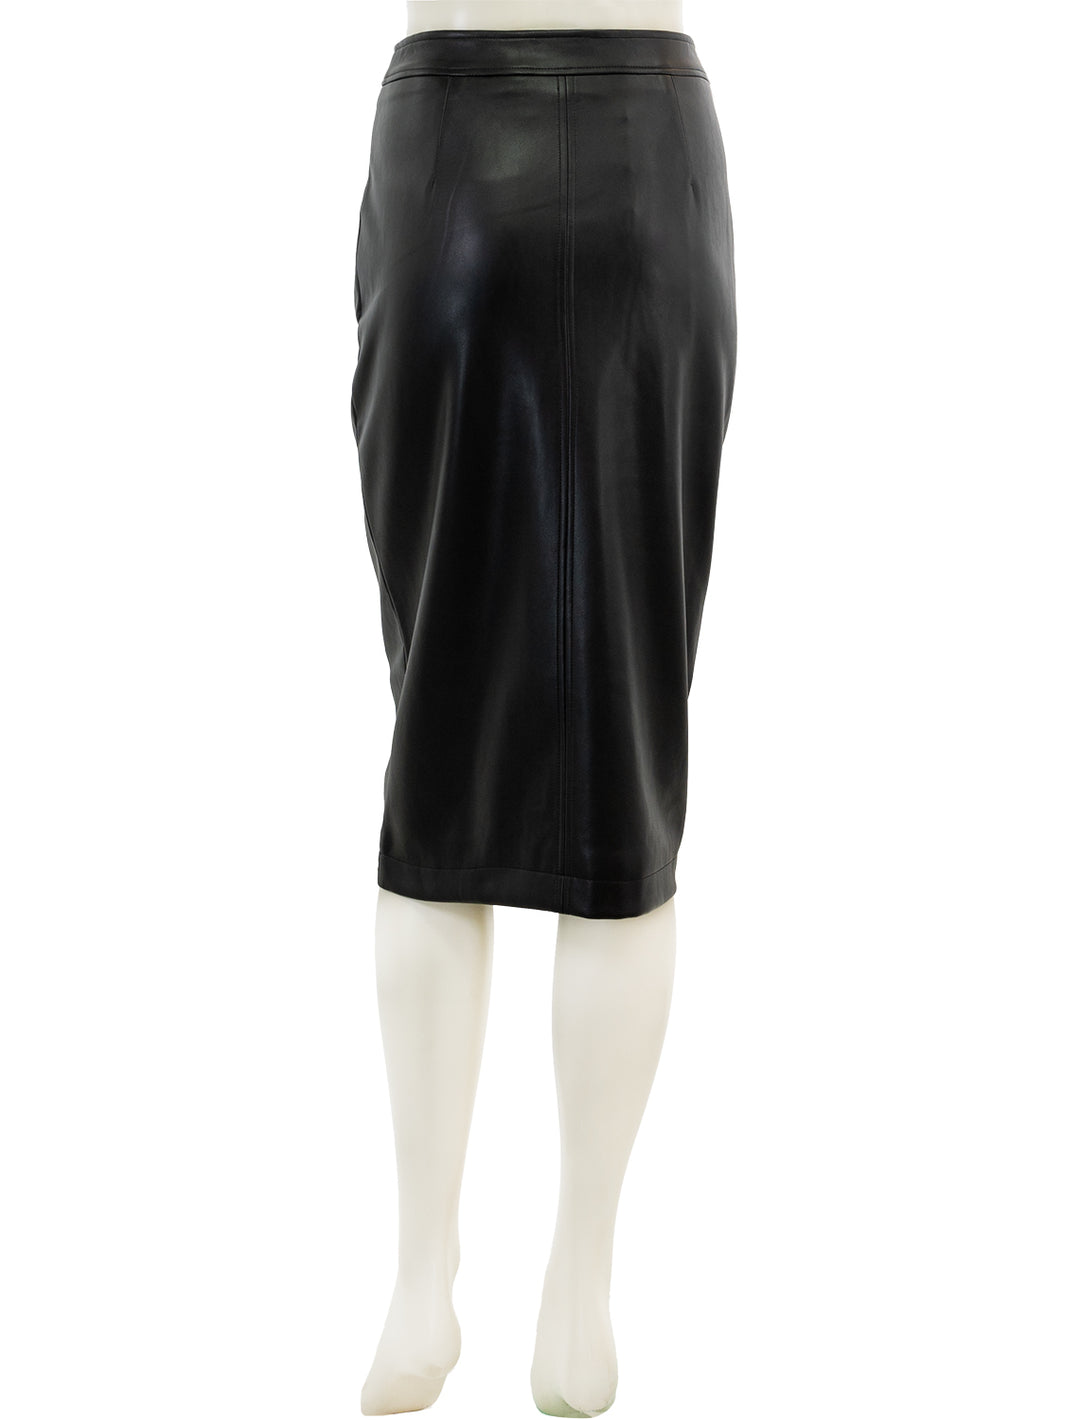 Back view of Essentiel Antwerp's encourage faux leather skirt in black.